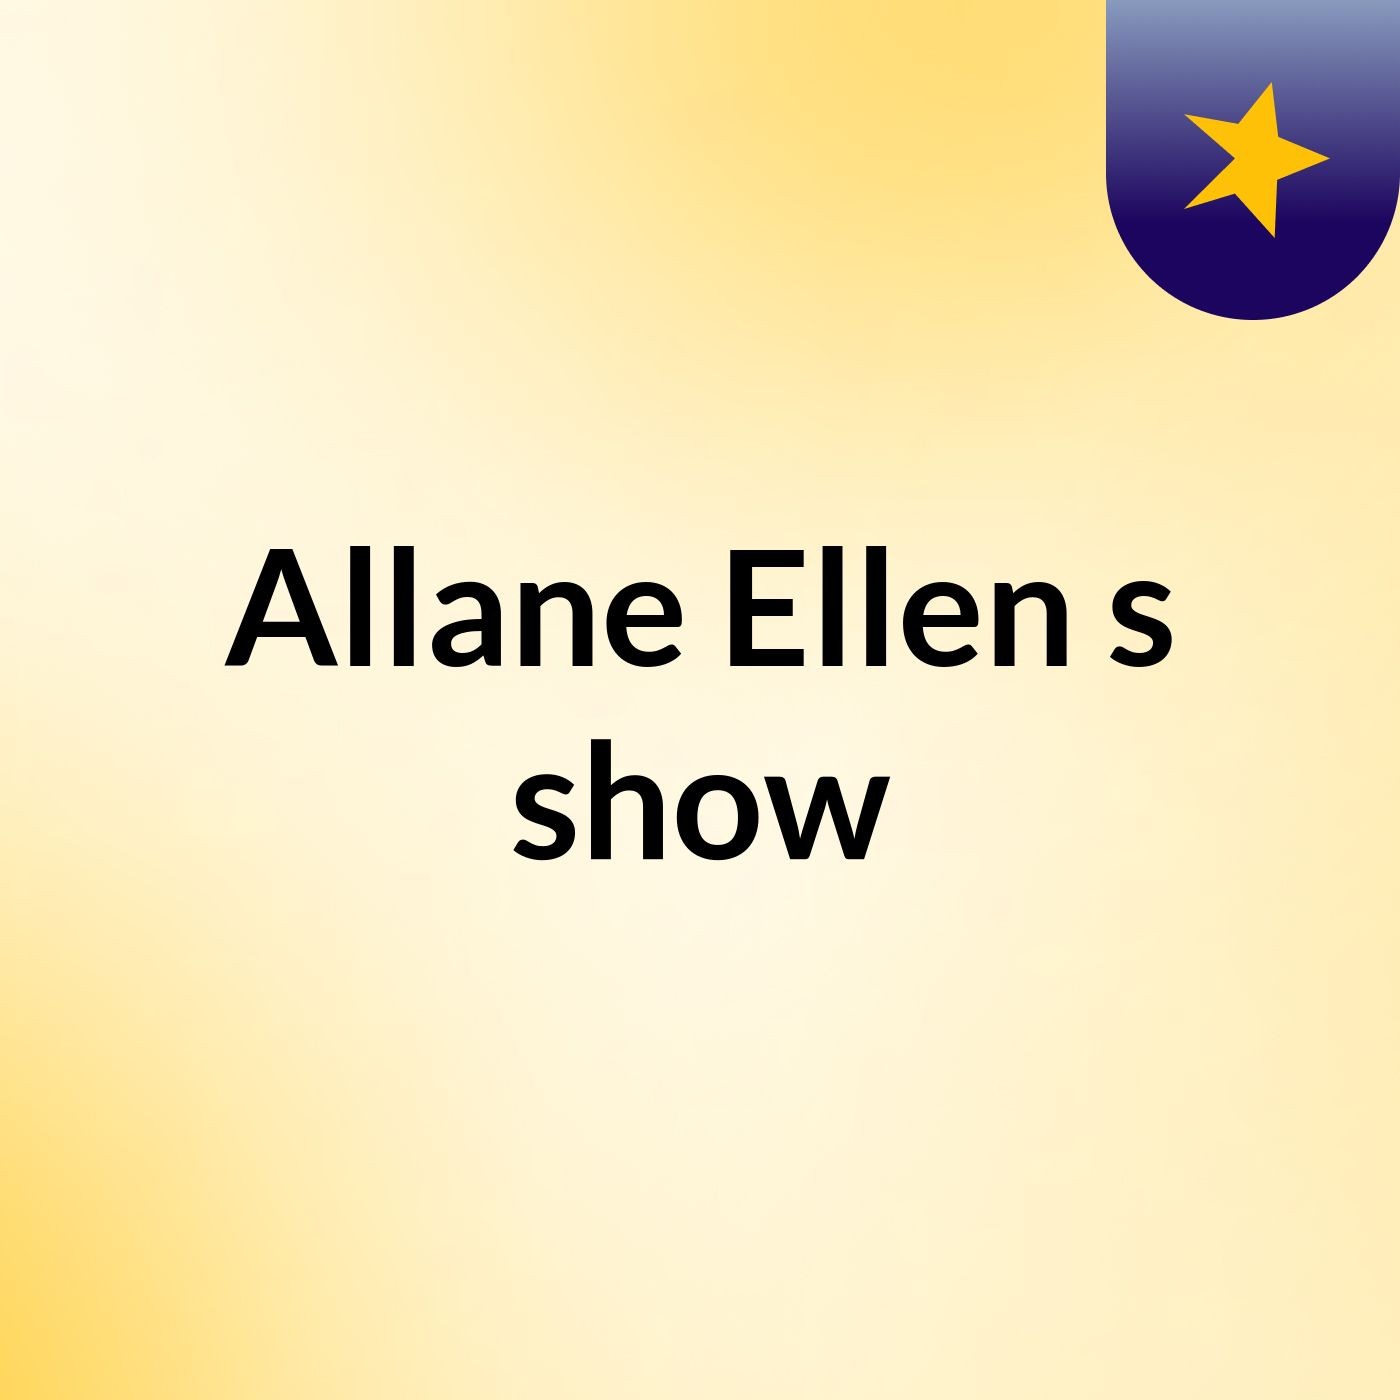 Allane Ellen's show